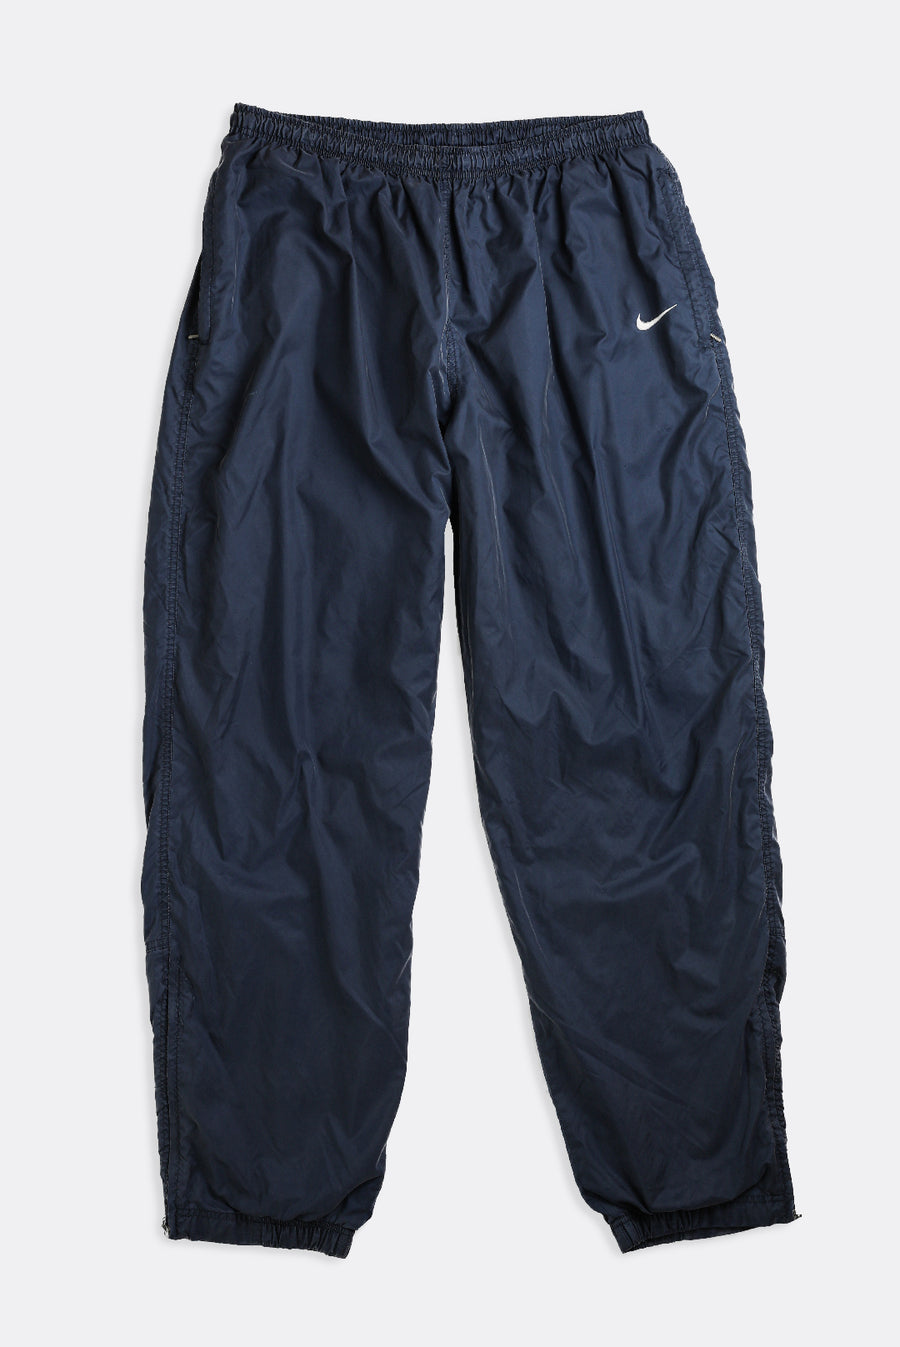 Vintage Nike Track Pants Navy Blue Polyester Grey Swoosh Calf